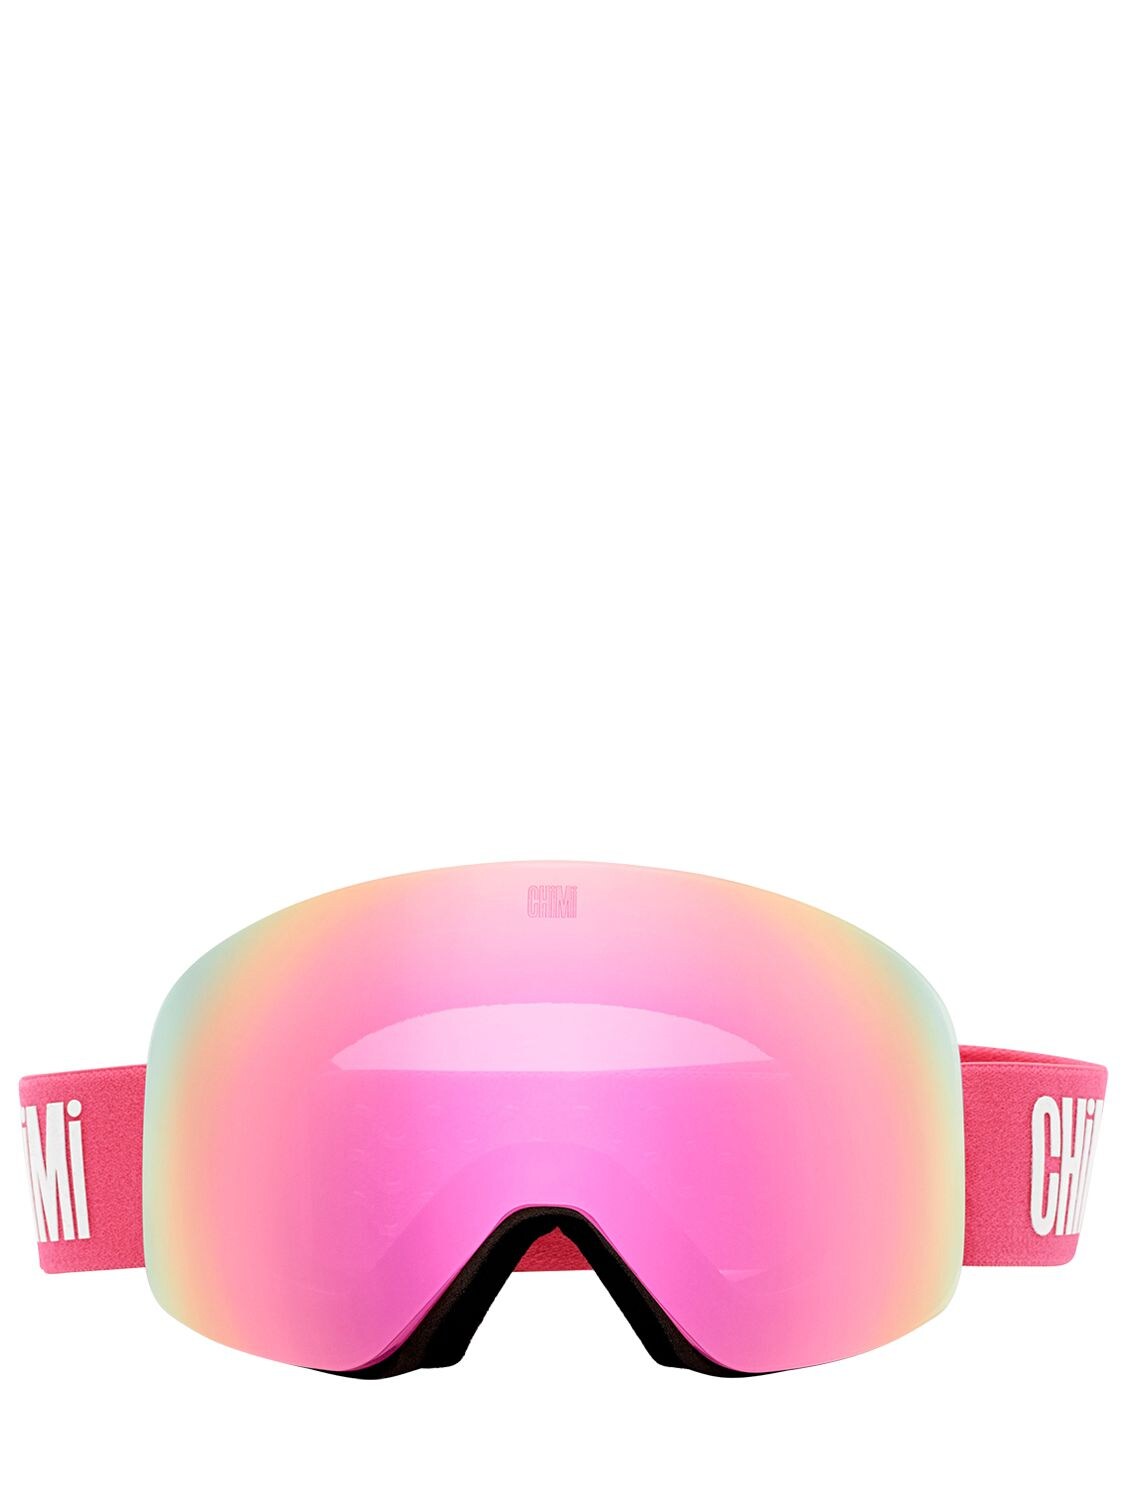 Chimi Guava Ski Goggles In Pink